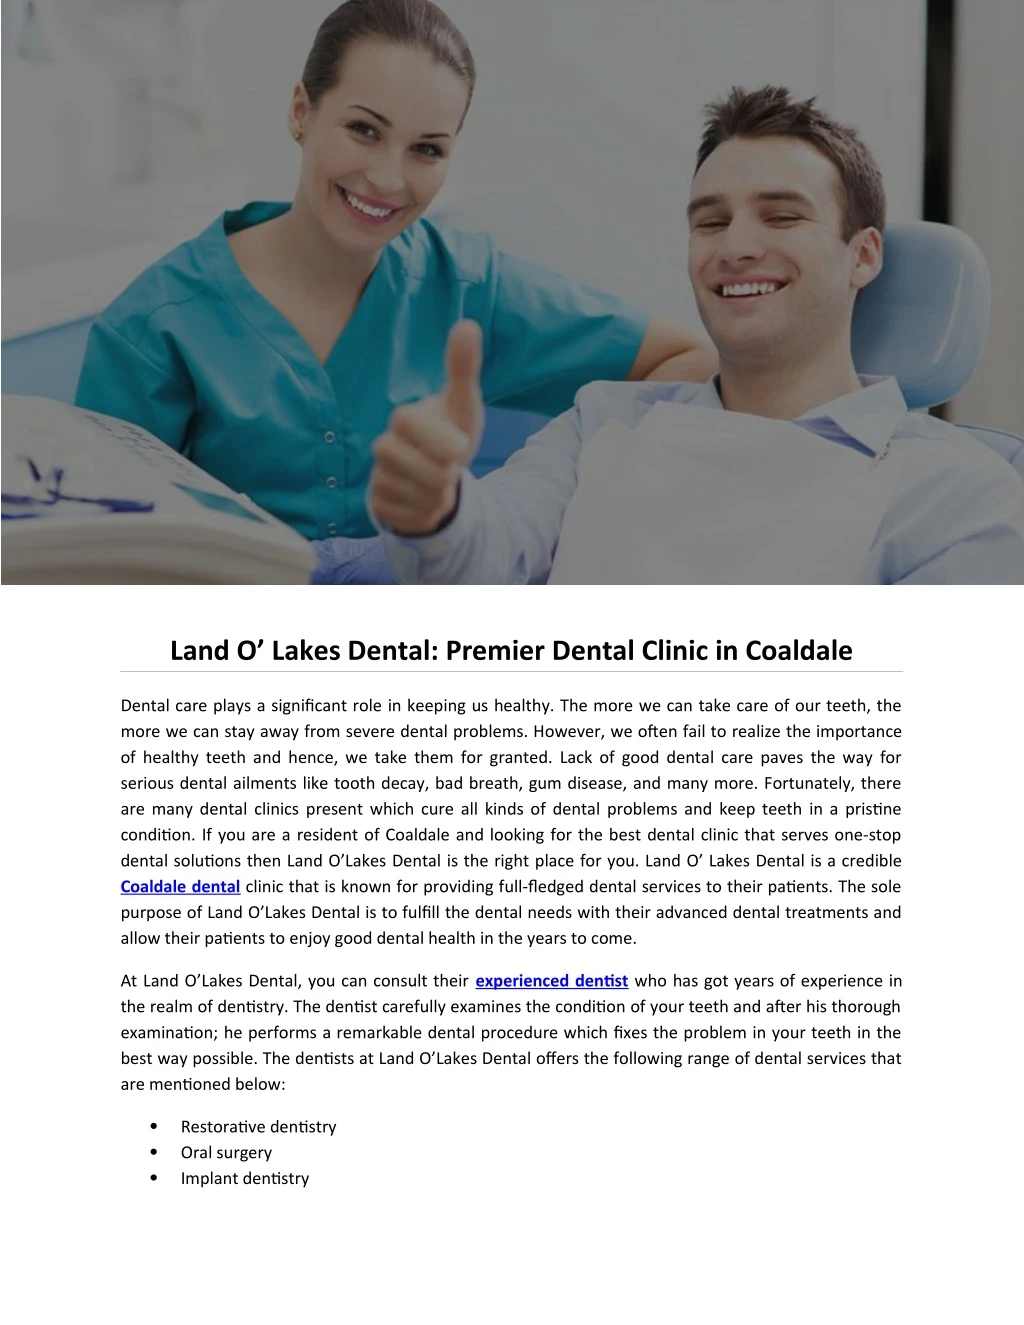 land o lakes dental premier dental clinic